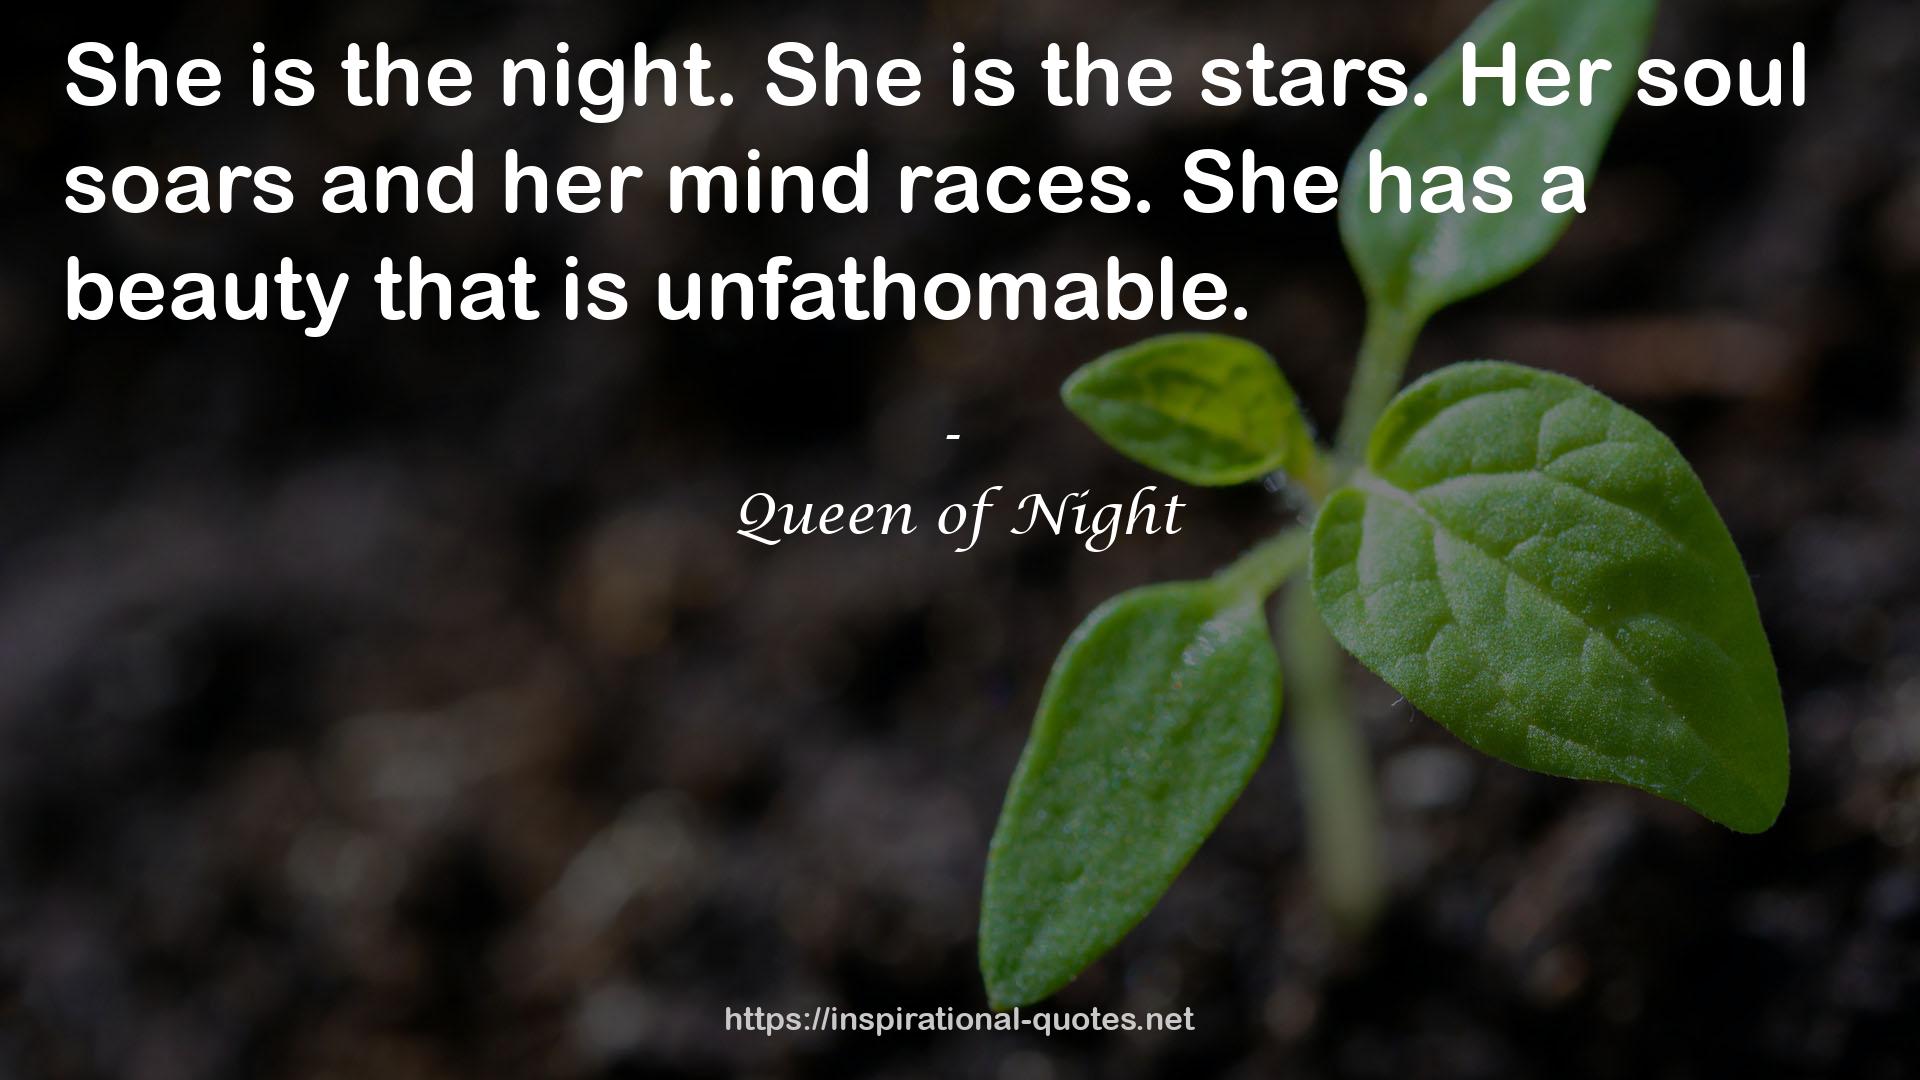 Queen of Night QUOTES